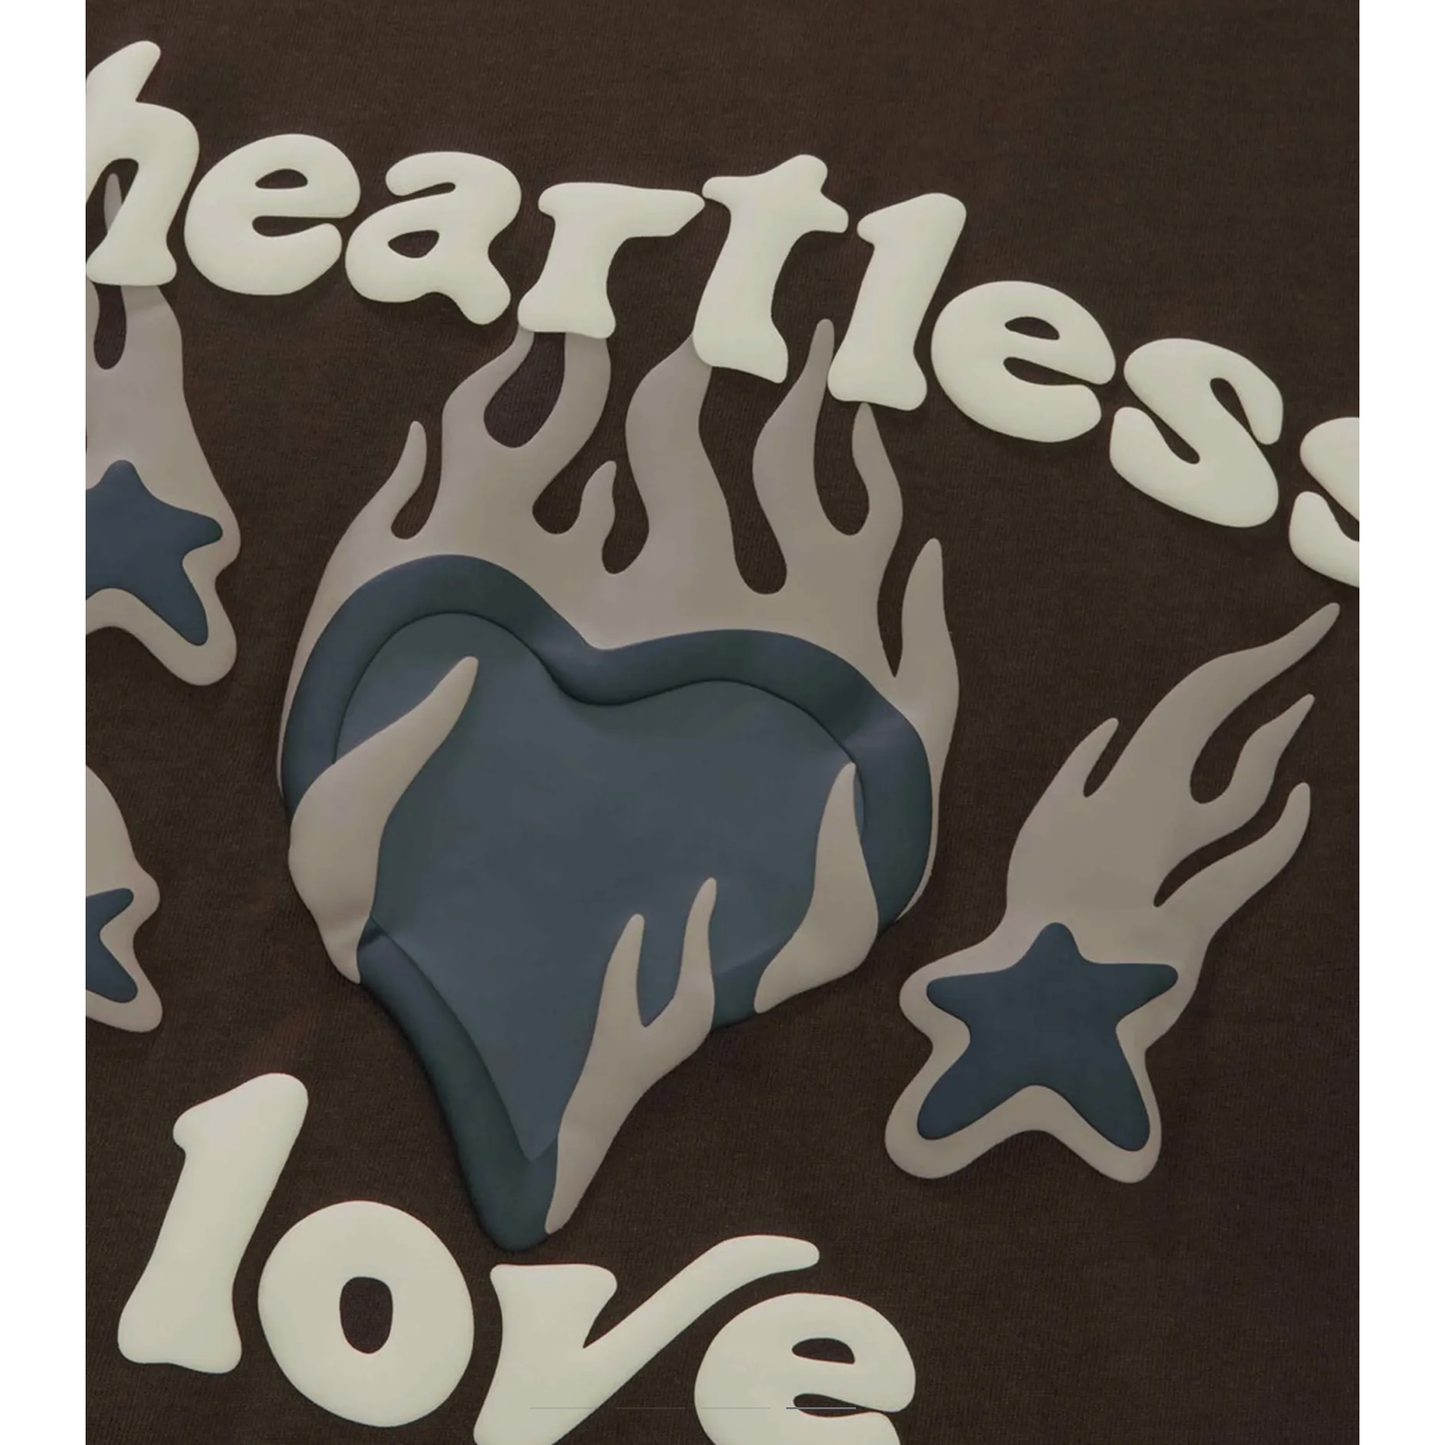 Broken Planet Heartless Love T-Shirt Mocha Brown by Broken Planet Market from £80.00